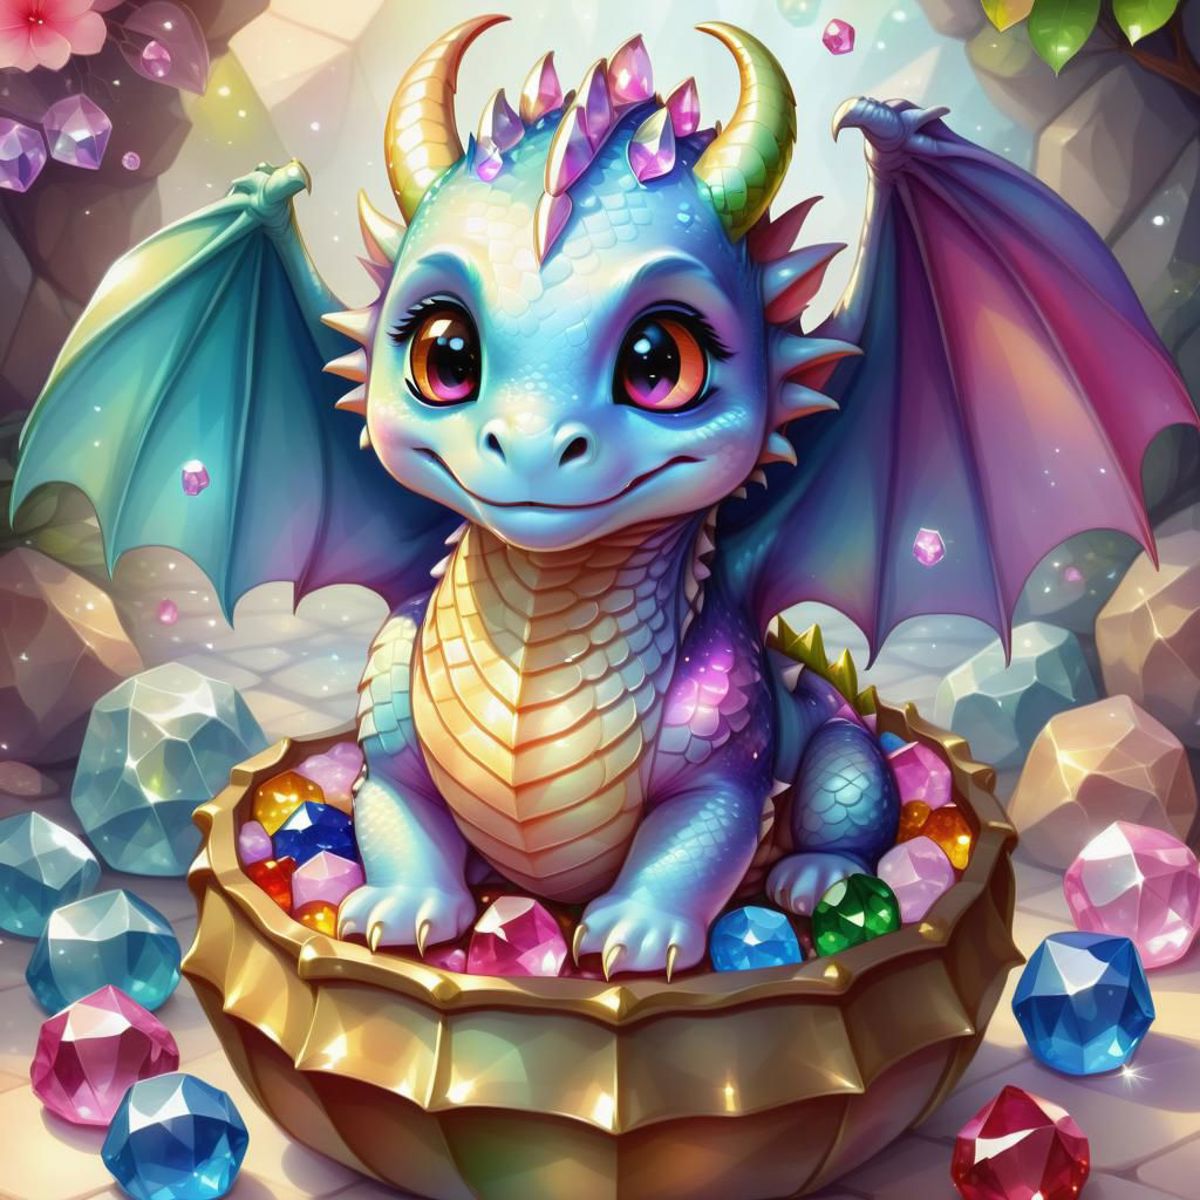 Digital Illustration of a Baby Dragon Sitting in a Basket of Gems.